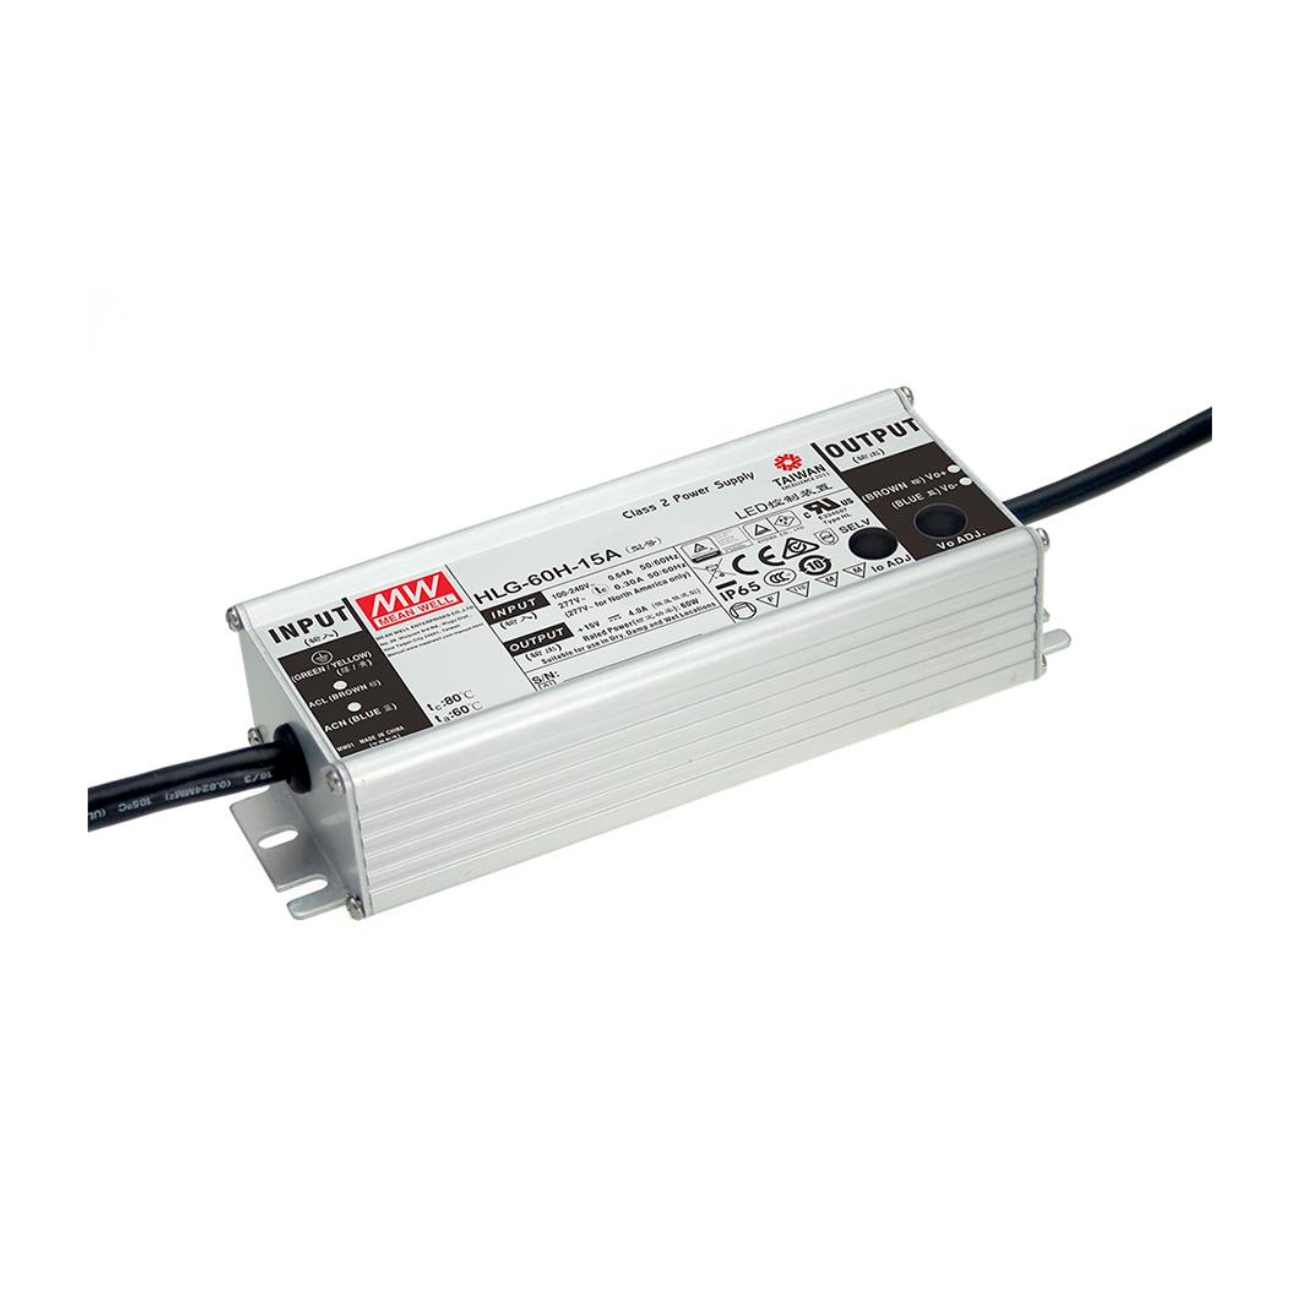 MeanWell HLG-60H-24AB (60W/24V) LED-Netzteil (dimmbar)